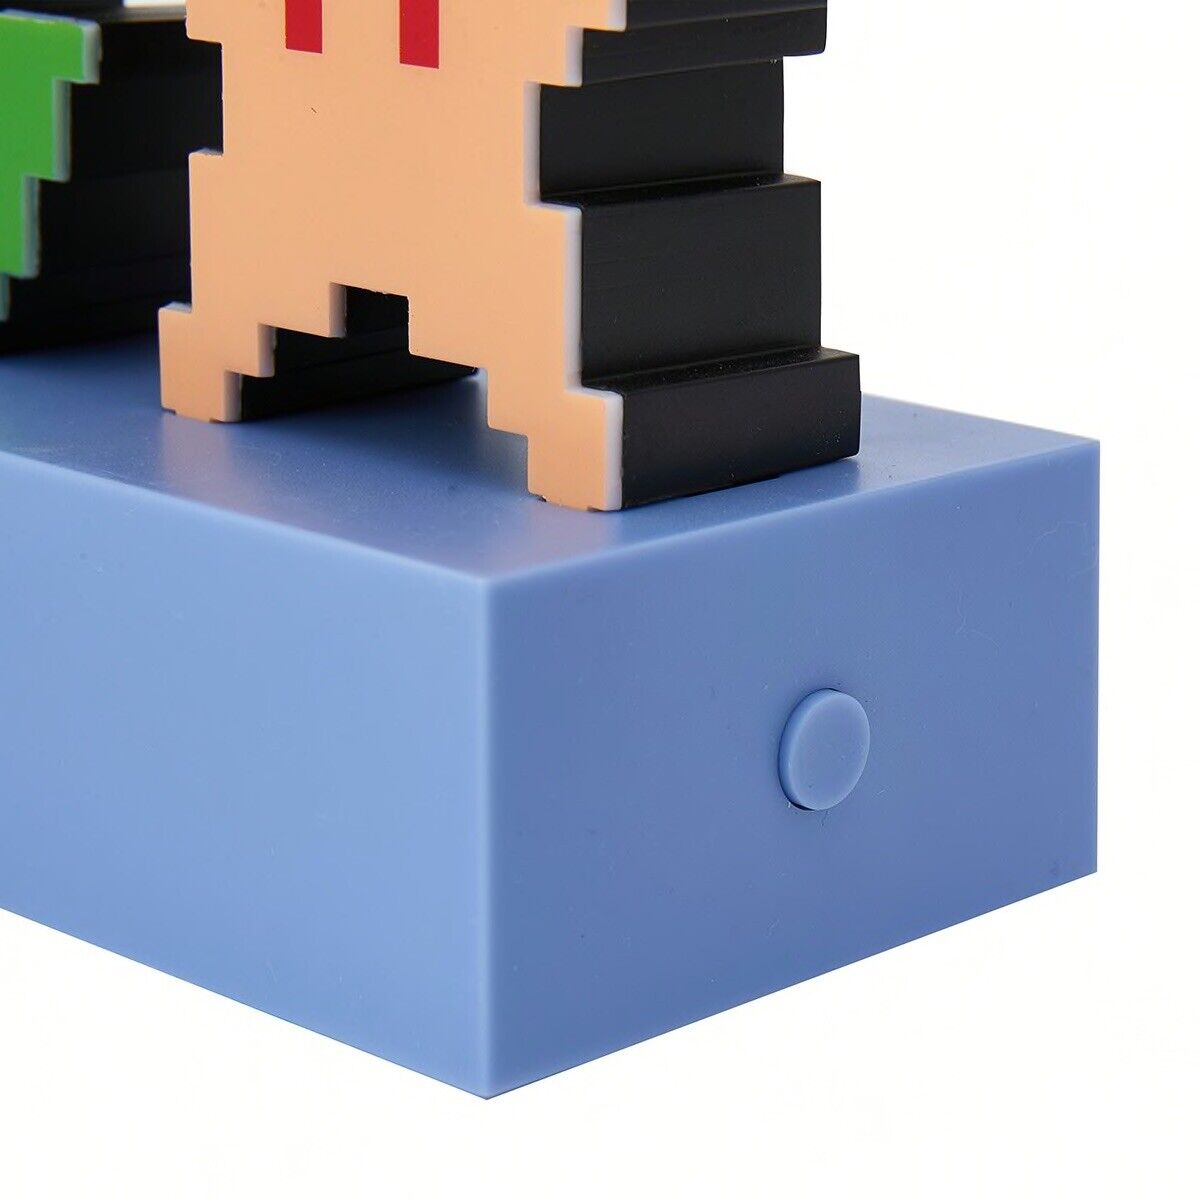 Super Mario Bros Icons Light Retro Music Companion Creative Christmas Xmas Gift Idea